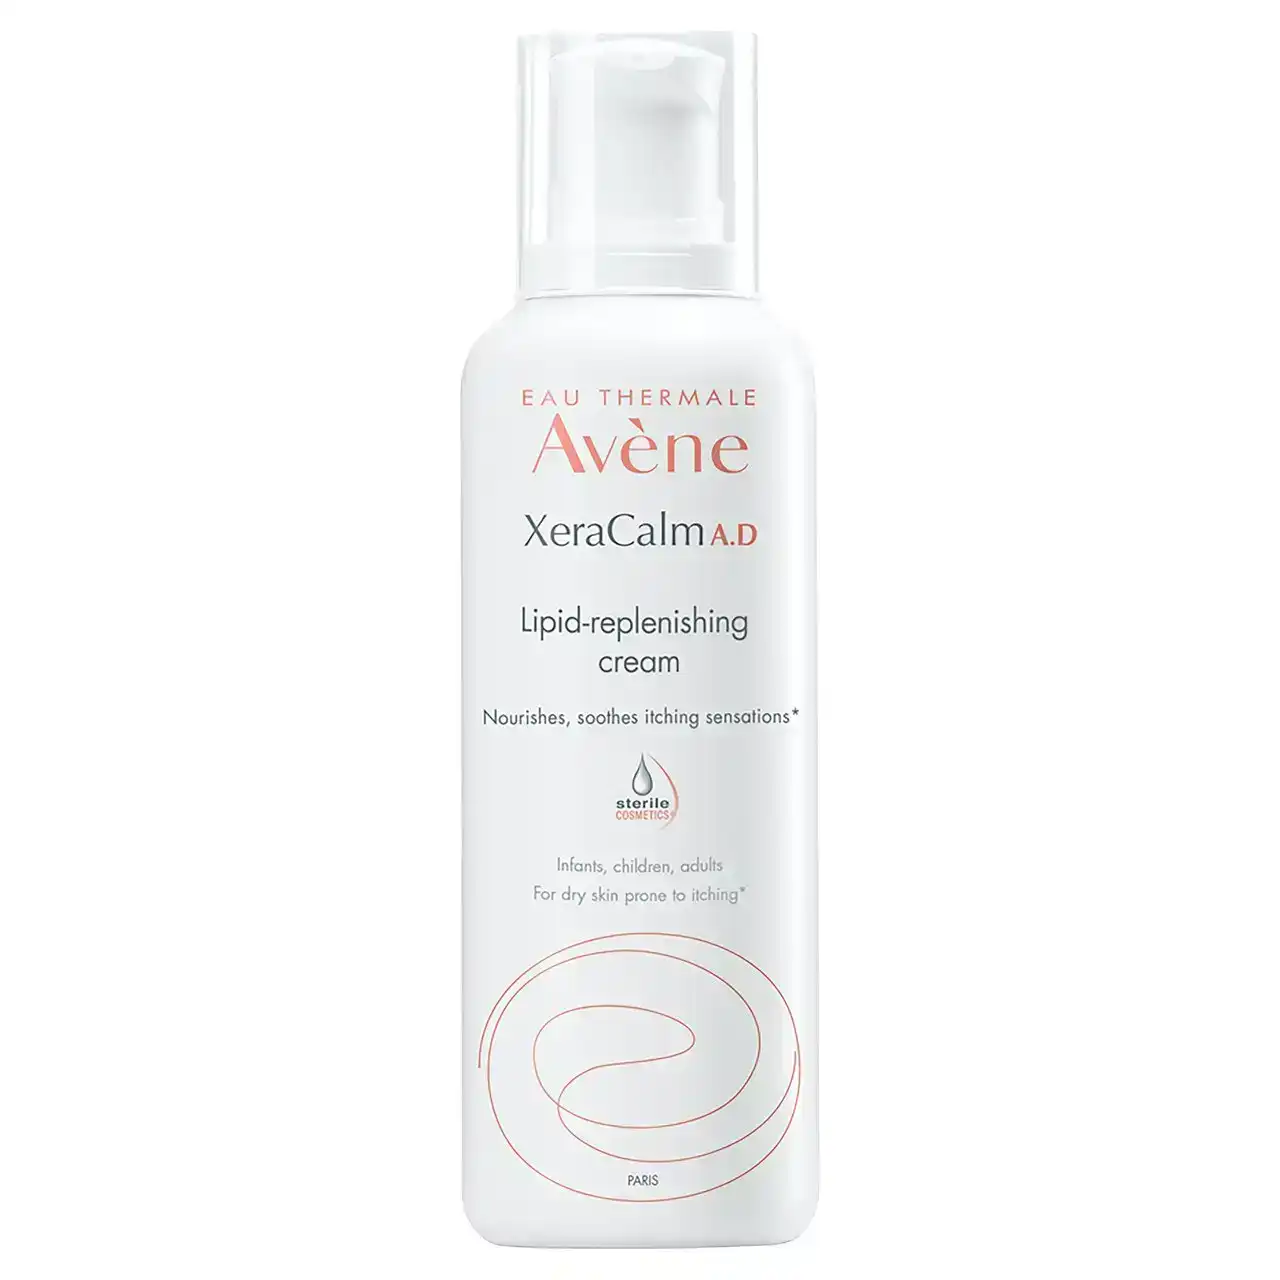 Avene XeraCalm A.D Cream 400ml - Moisturiser for eczema-prone skin